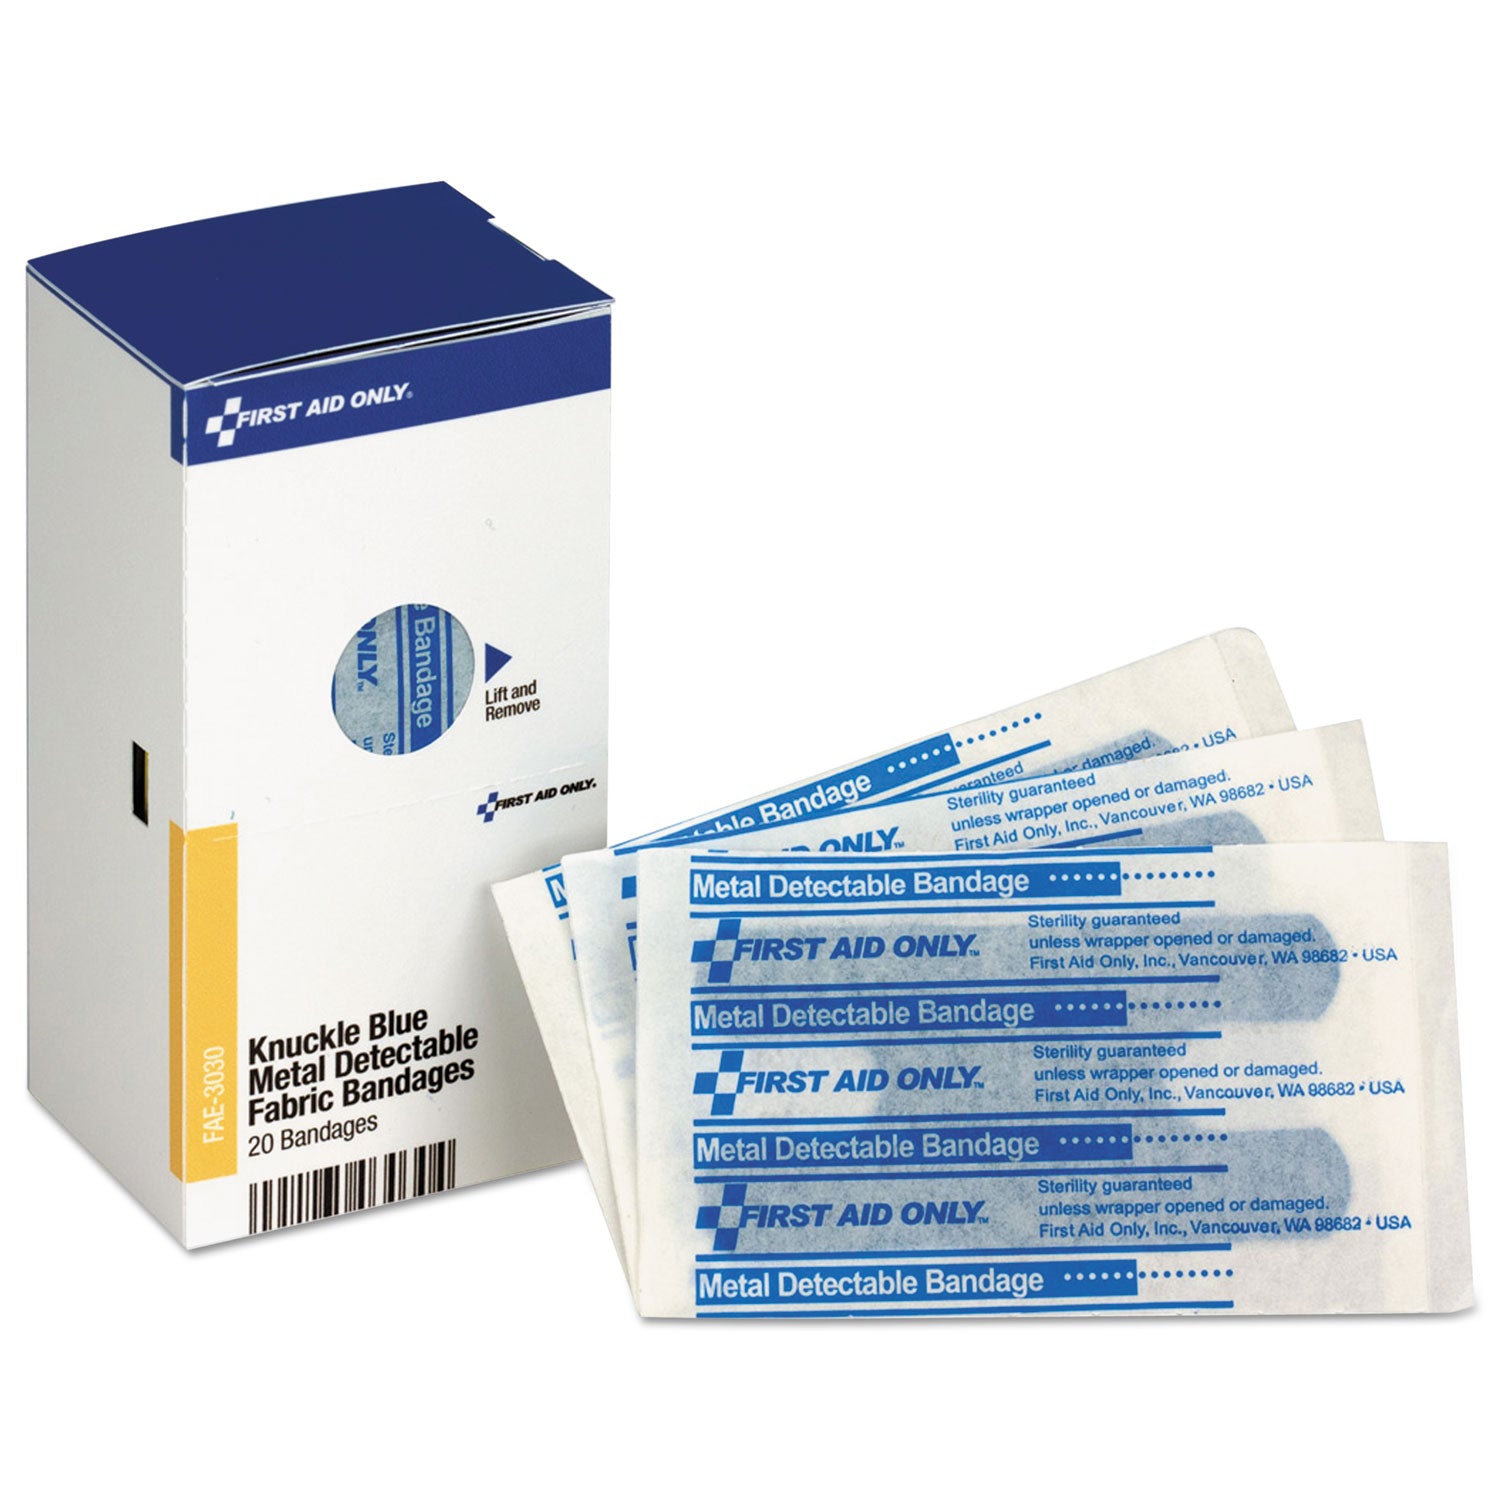 smartcompliance-blue-metal-detectable-bandages-knuckle-1-x-3-20-box_faofae3030 - 1